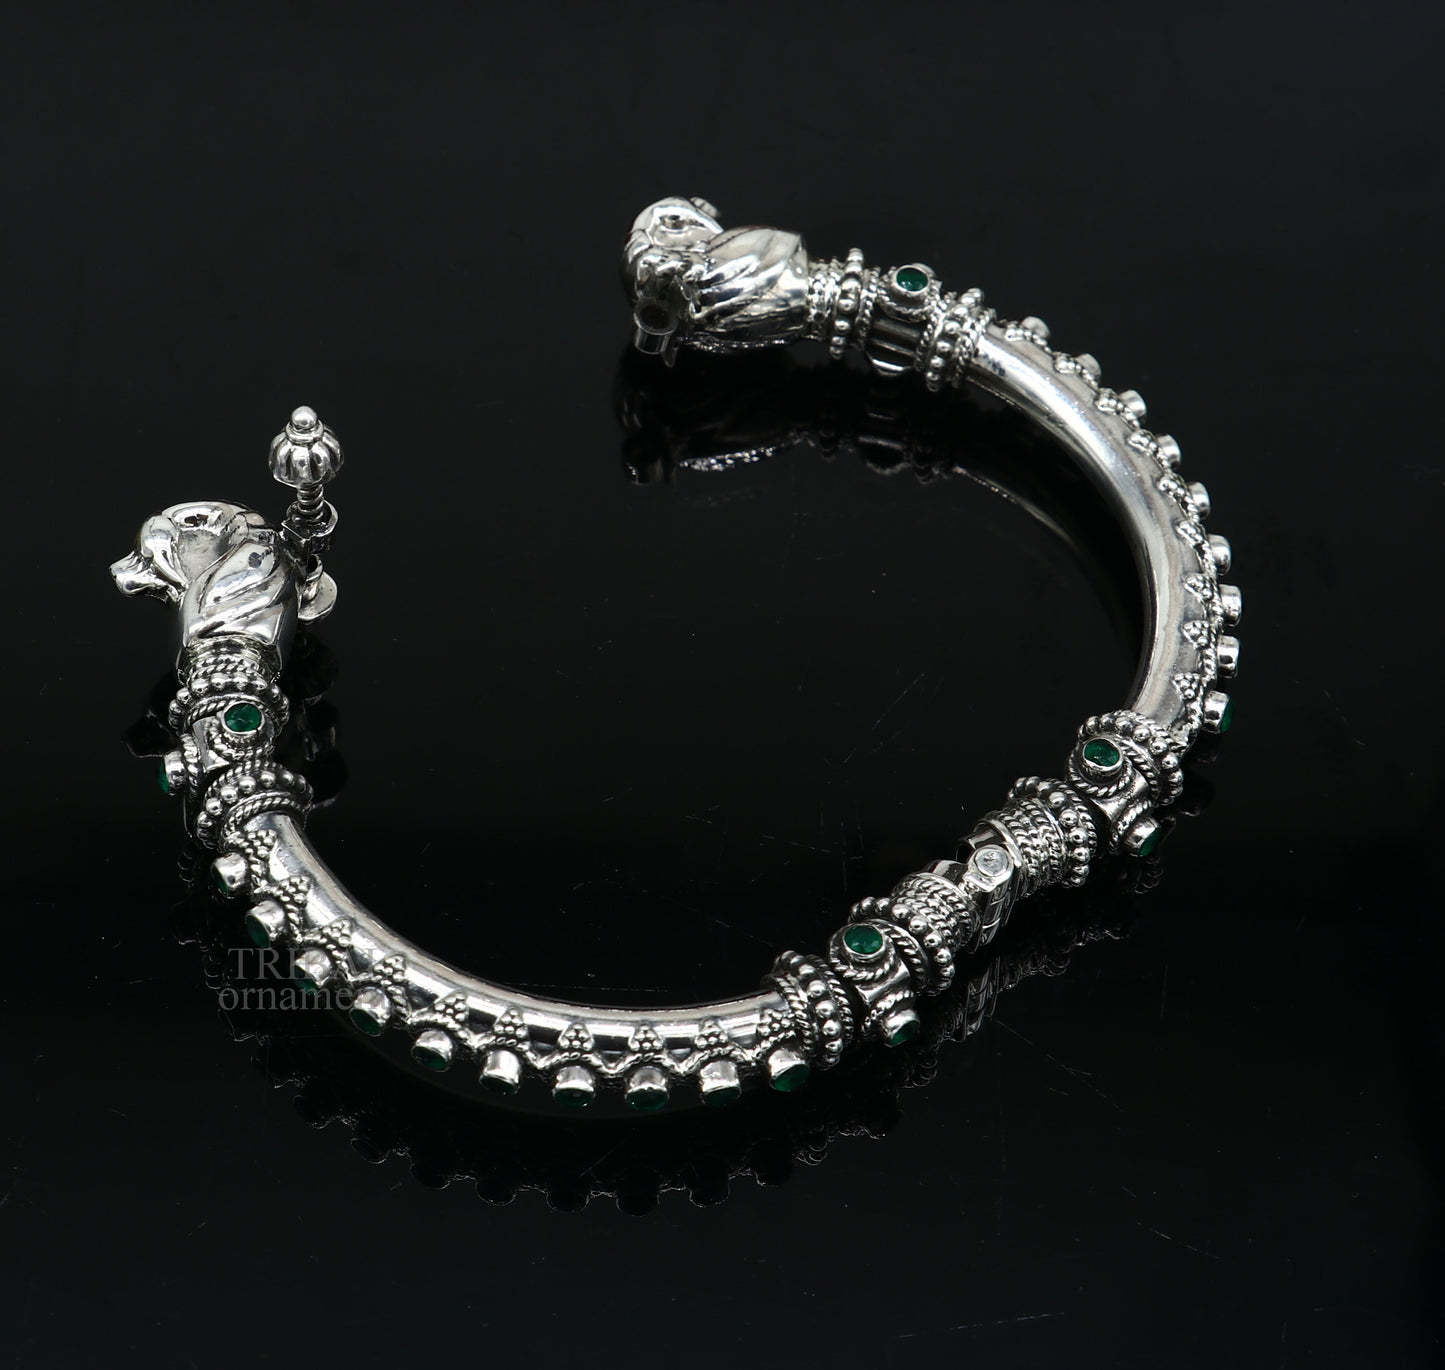 Vintage design handcrafted unique work 925 sterling silver bangle bracelet kada unique screw locking system best gifting jewelry nsk465 - TRIBAL ORNAMENTS